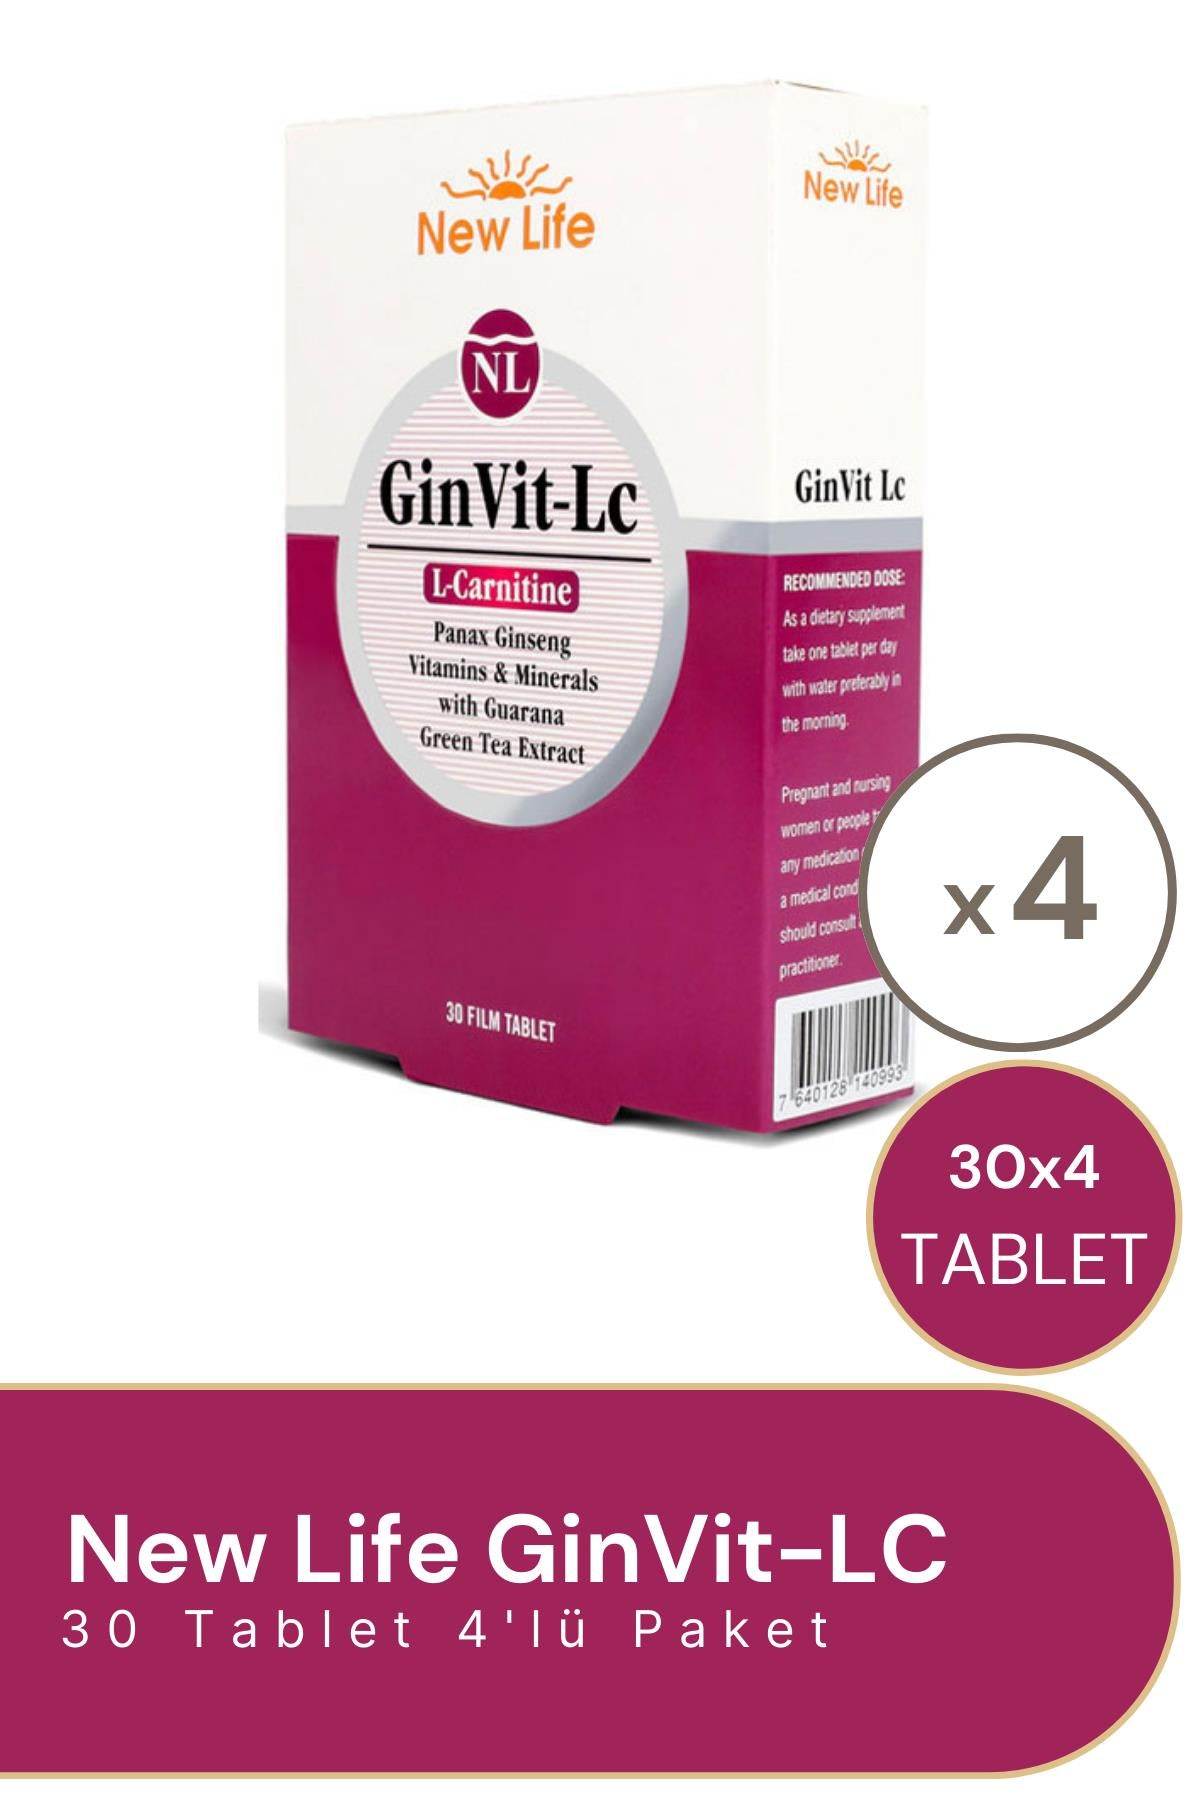 New Life GinVit-LC 30 Tablet 4'lü Paket